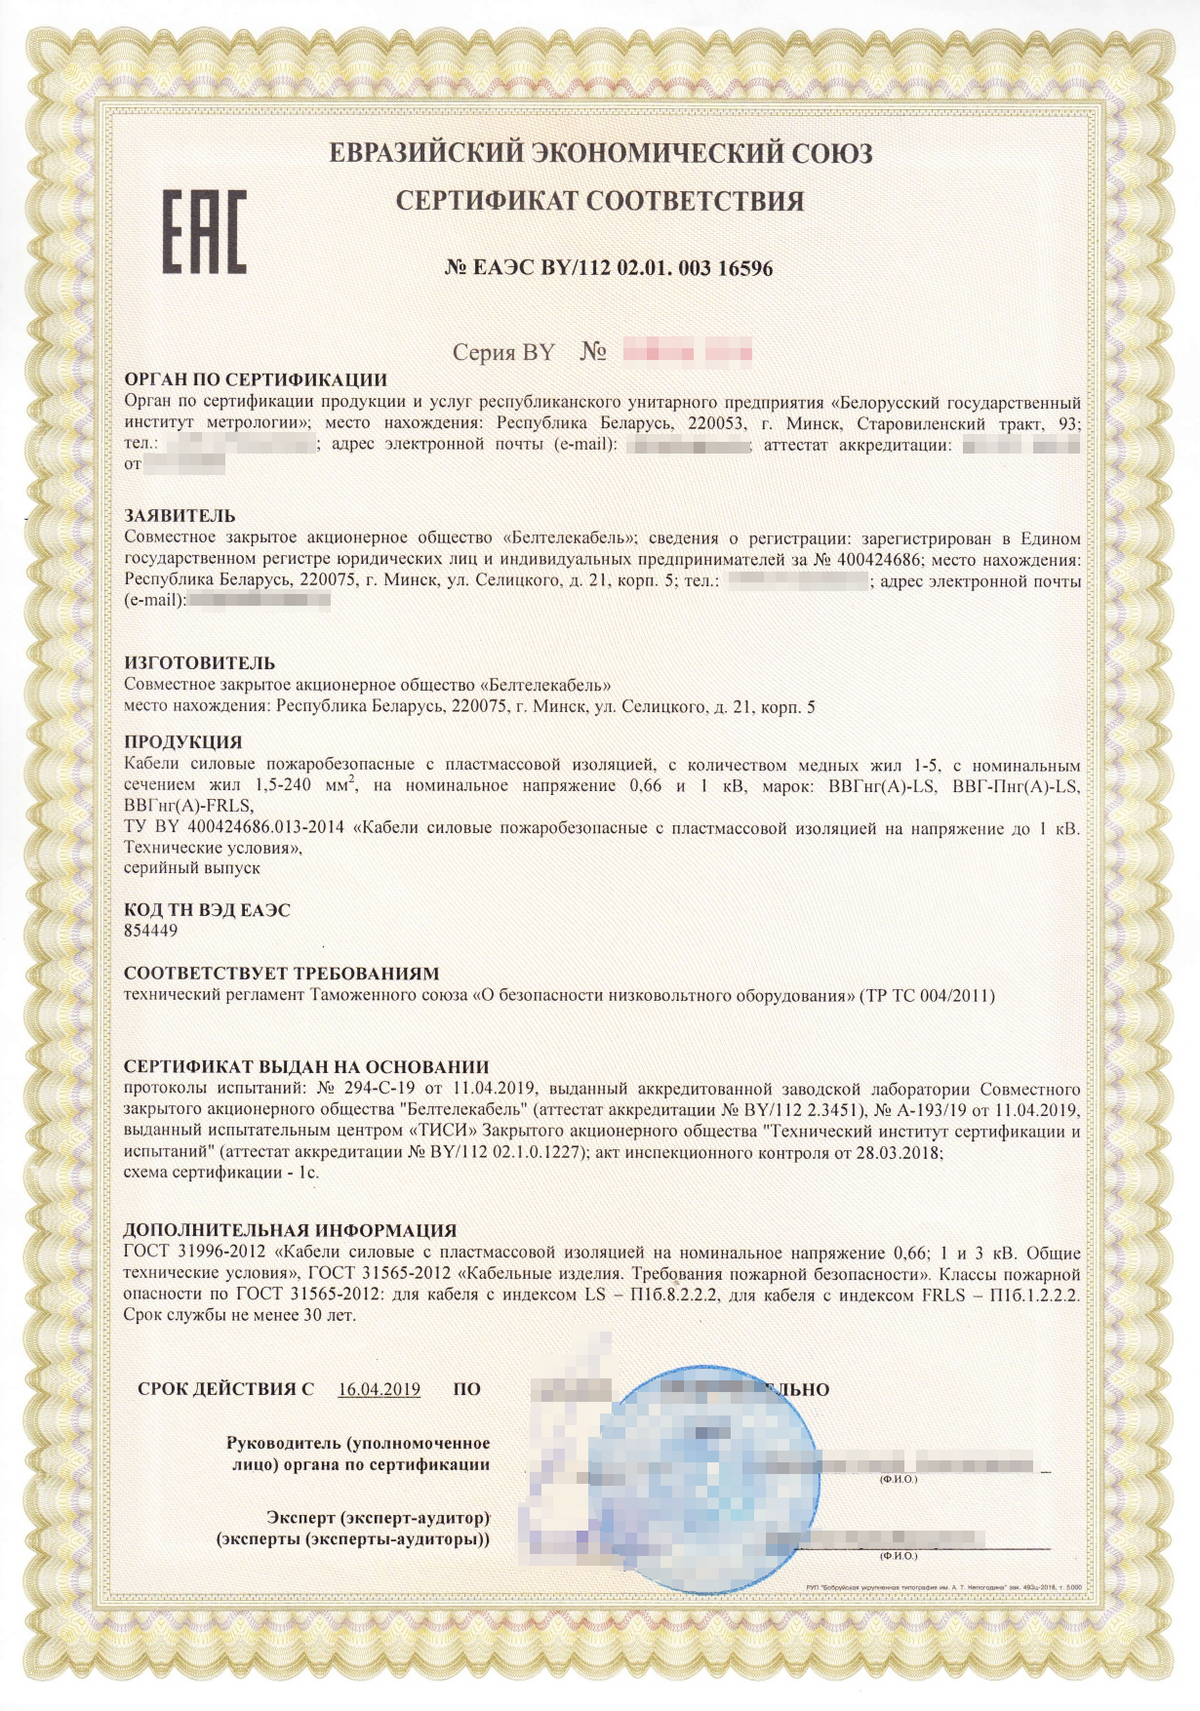 Пример сертификата соответствия техническим регламентам ЕАЭС